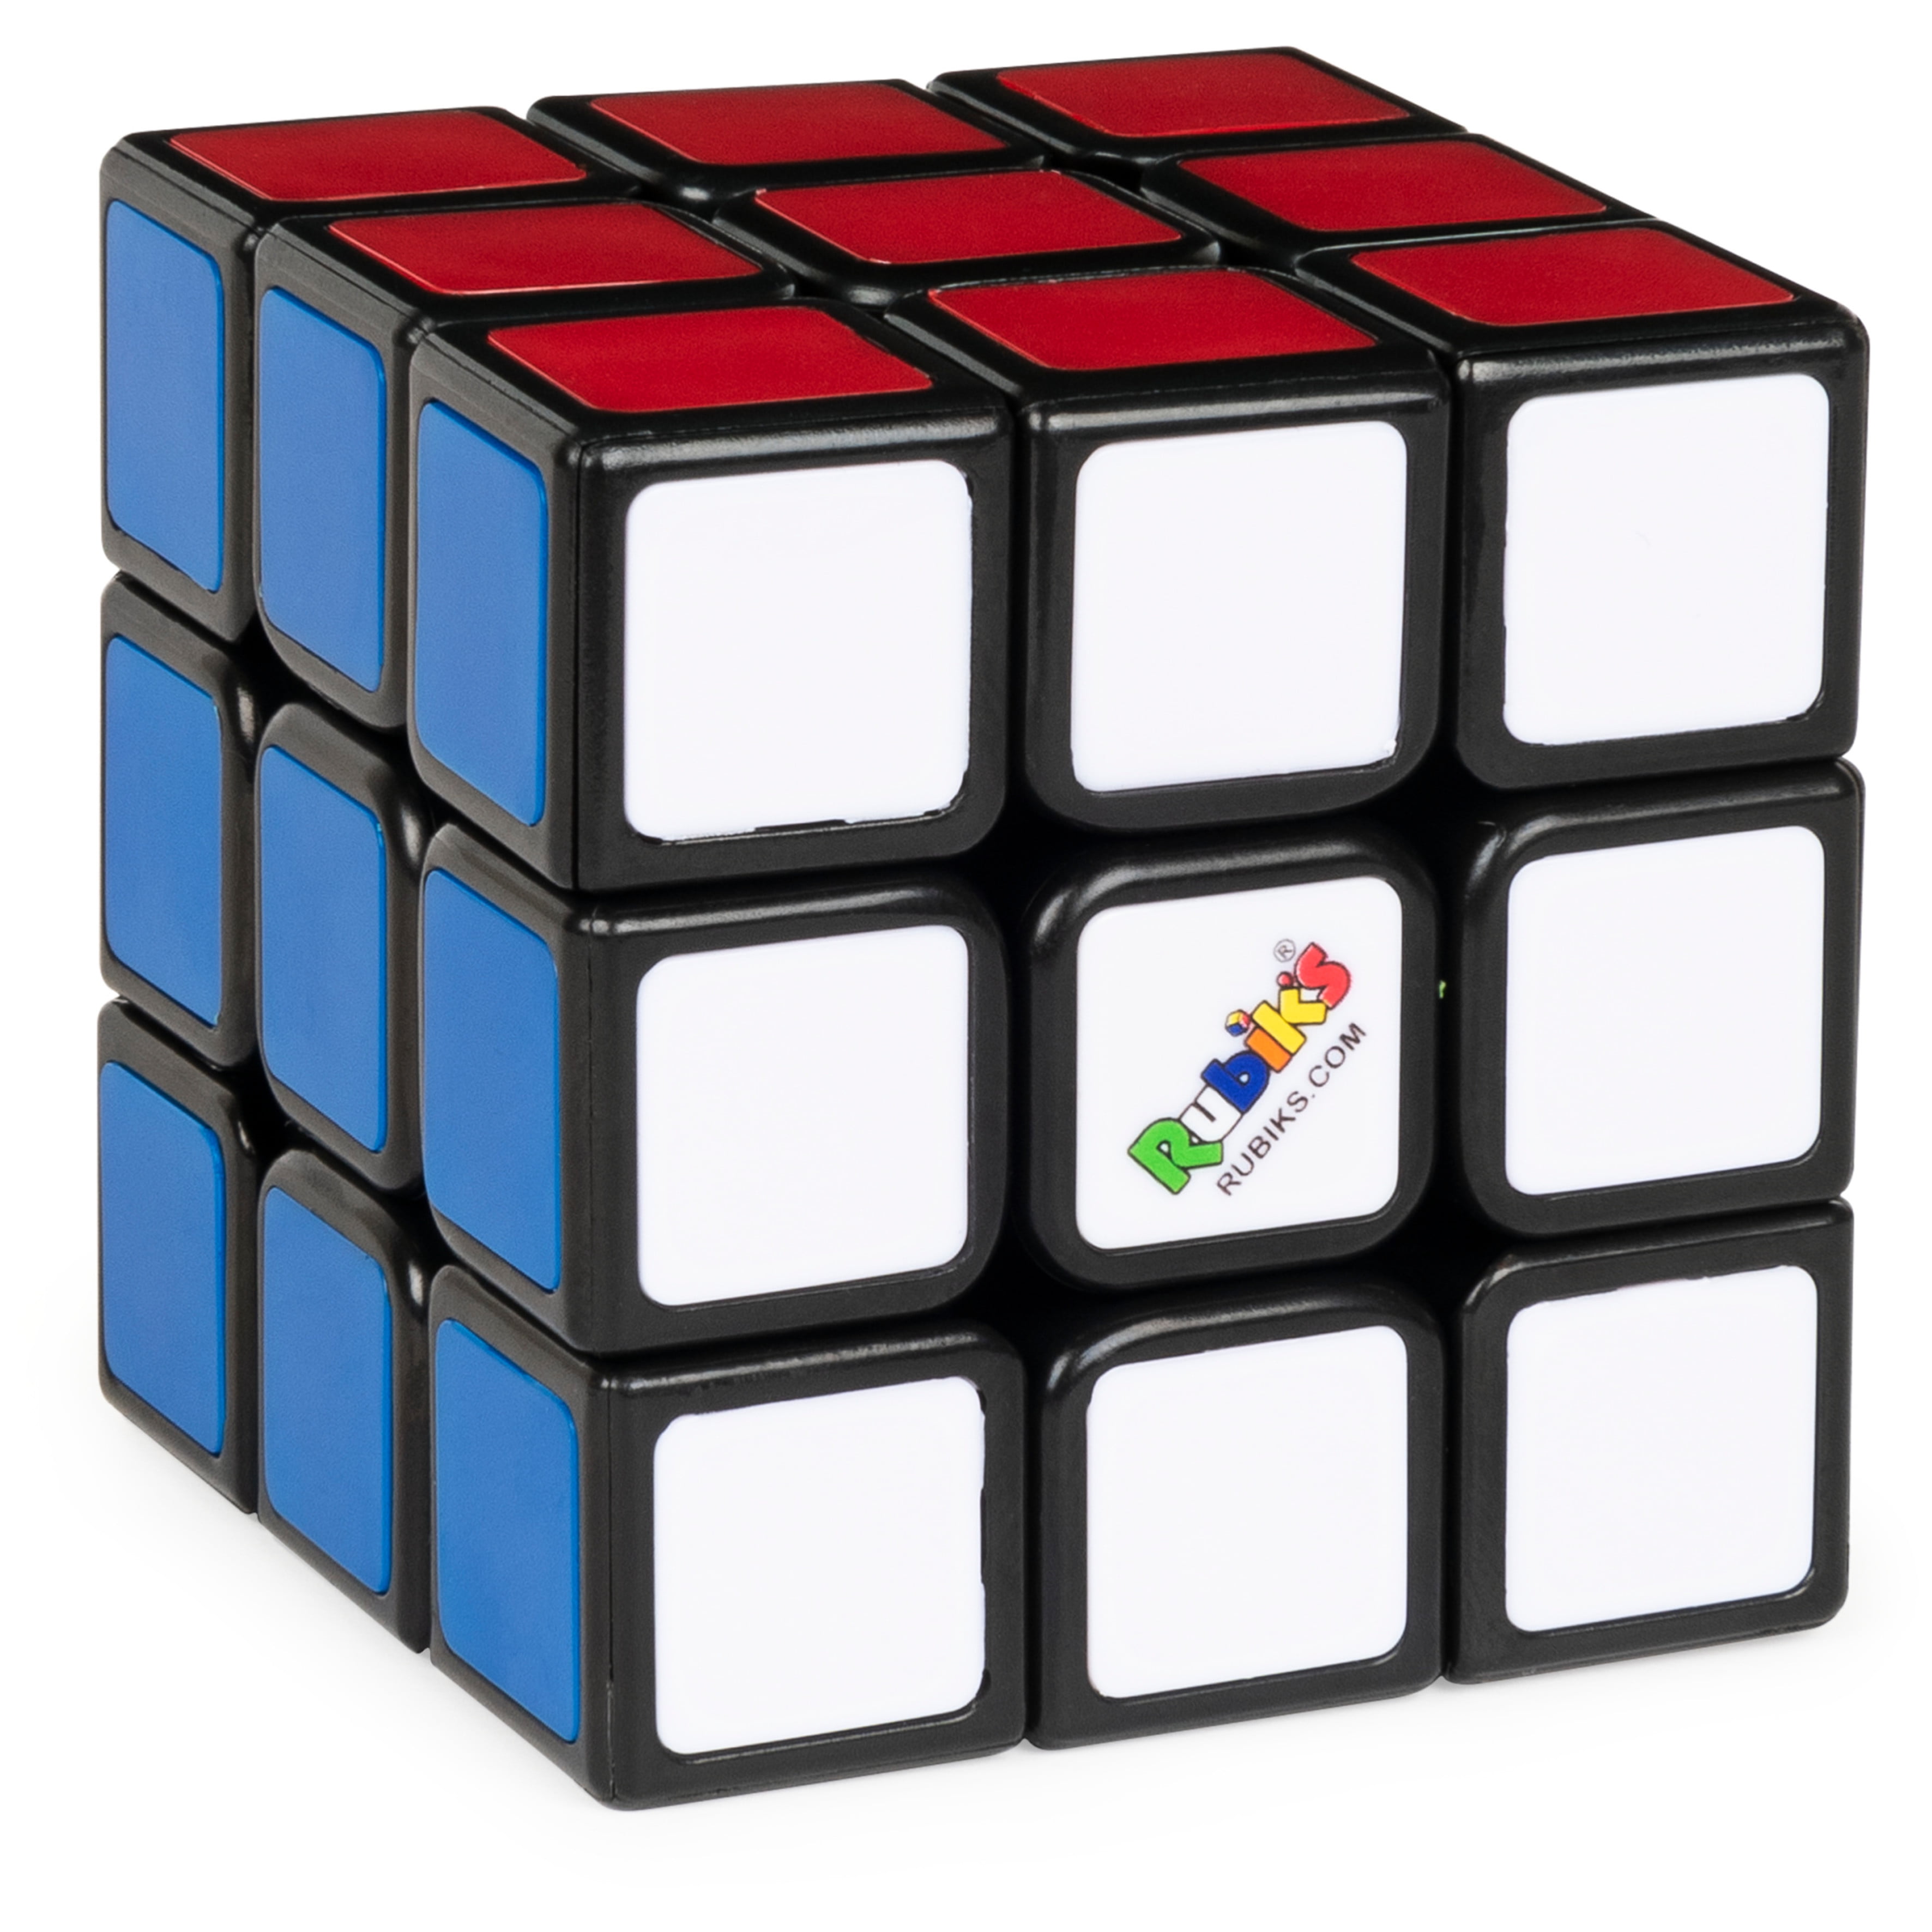 NEW Genuine Rubik's Cube Puzzle 3x3 rubic Retro Present Official logic gift Xmas 